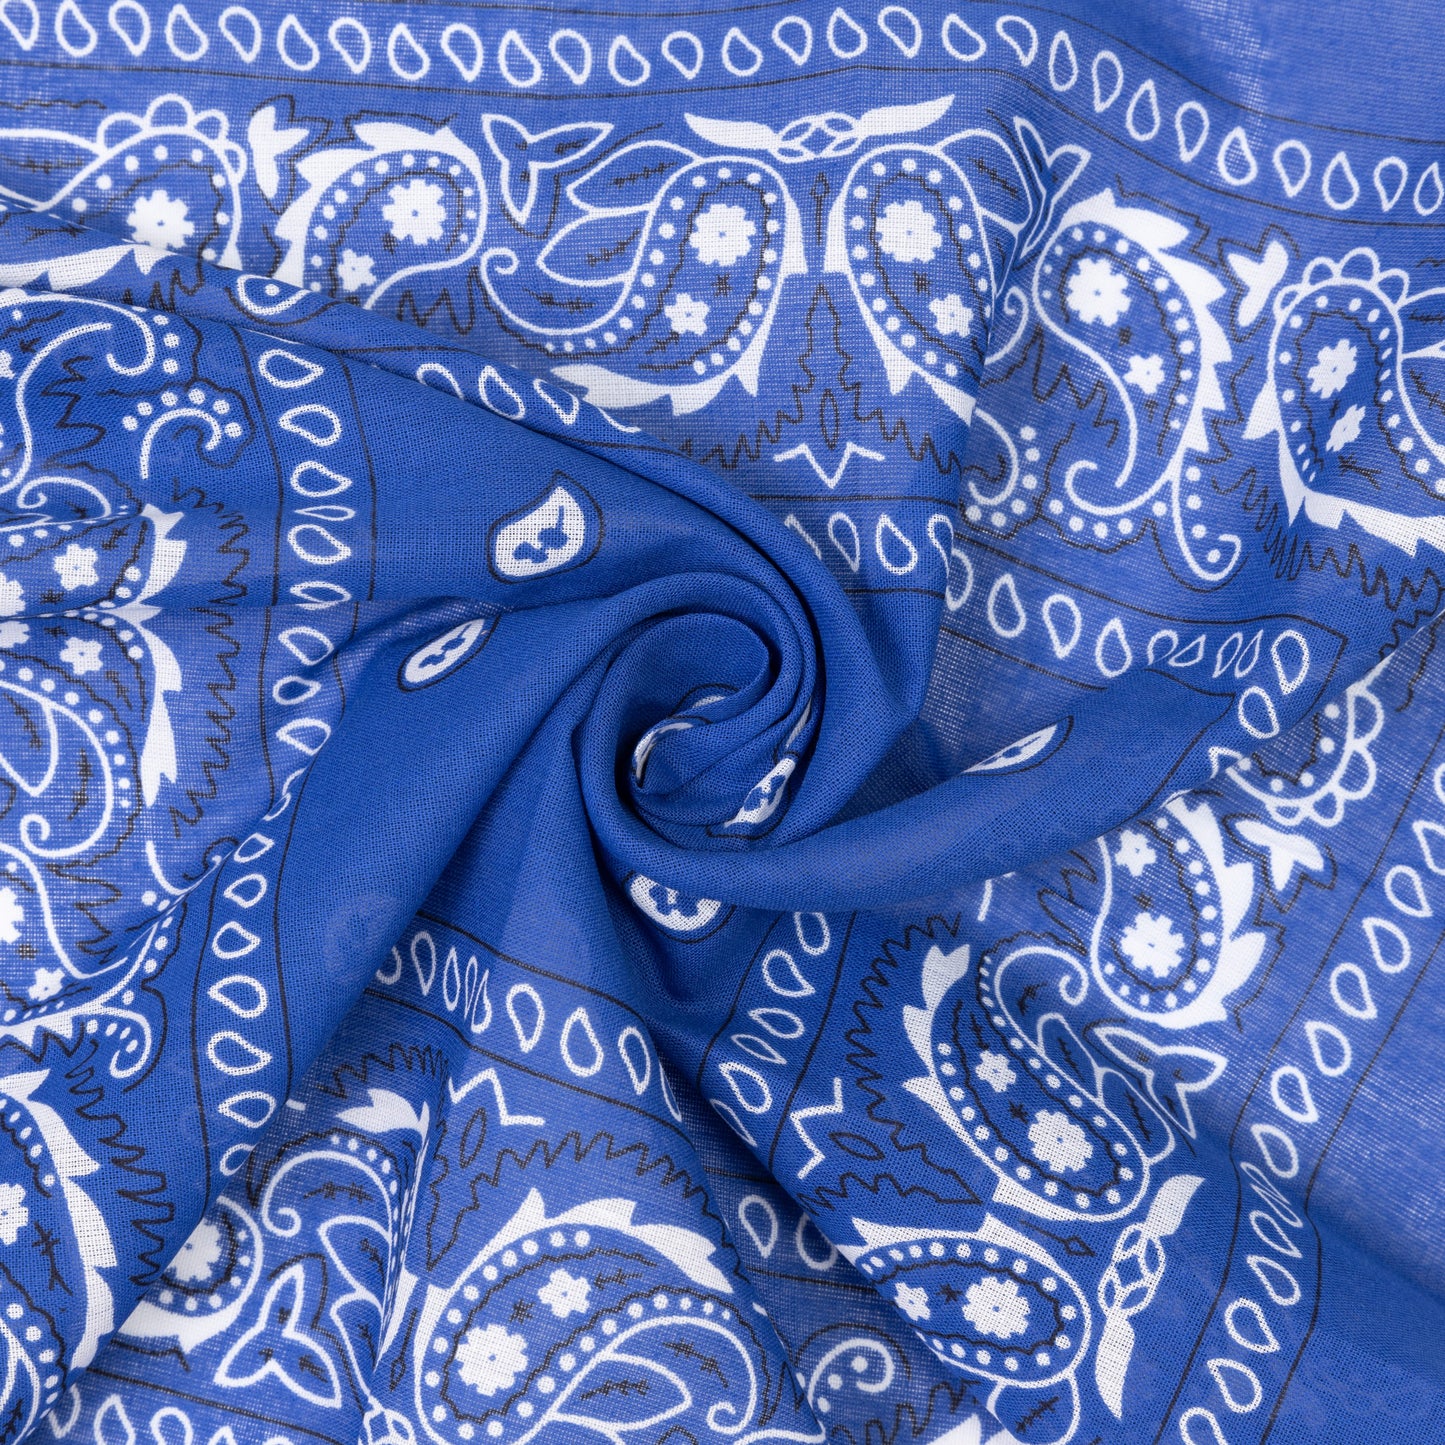 Bandana headscarf blue 